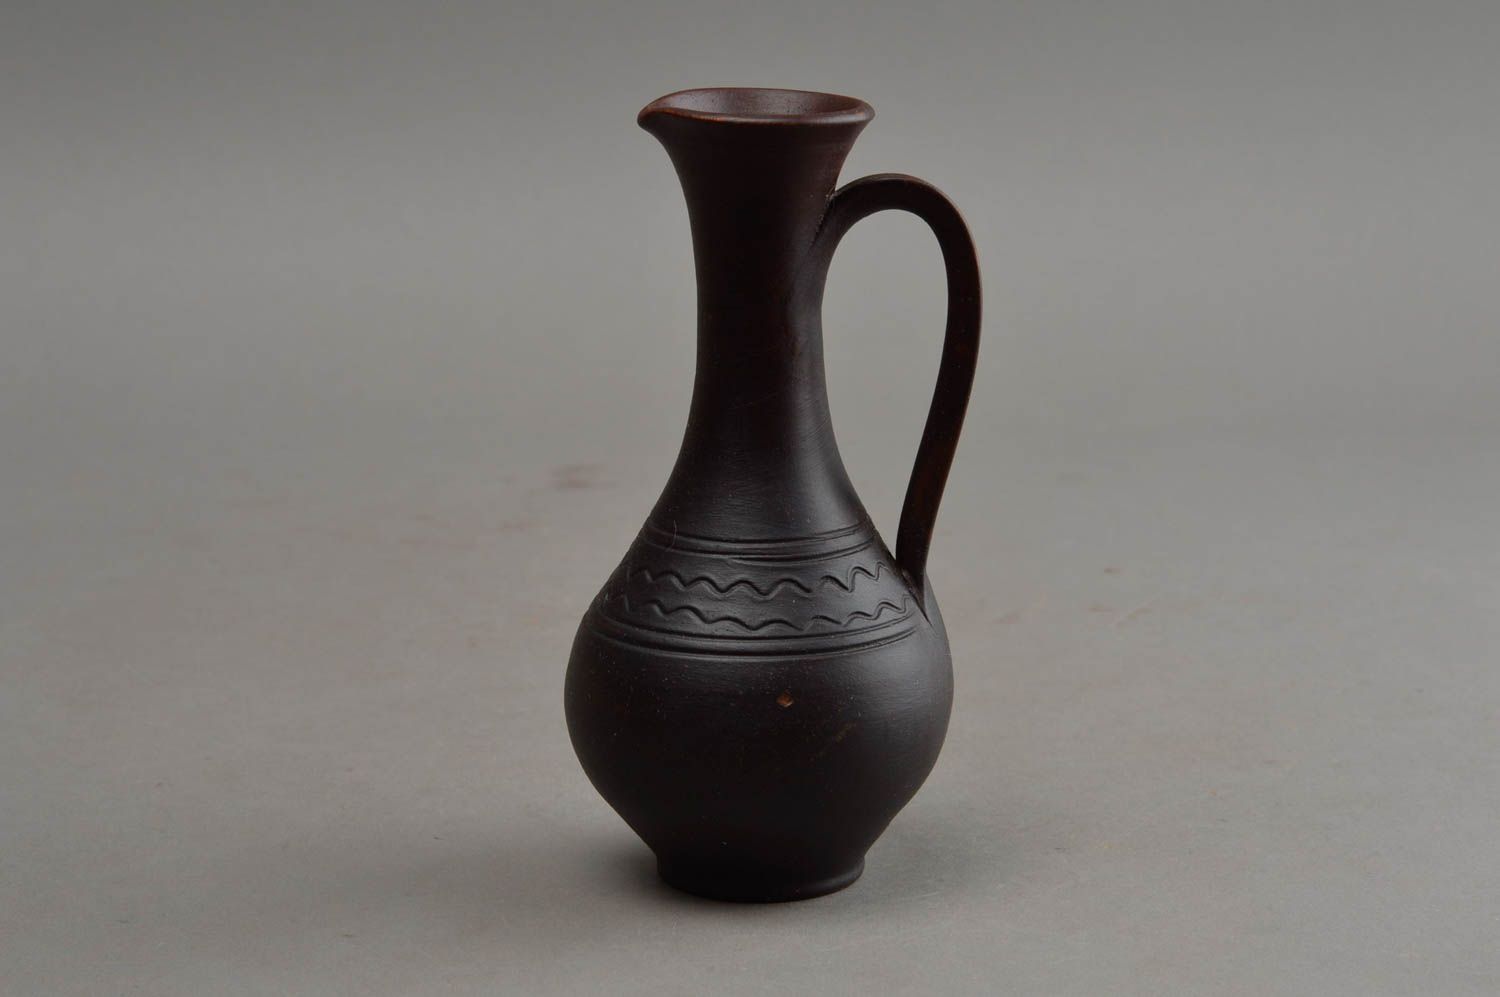 10 oz ceramic classic style handmade wine carafe 6 inches, 0,37 lb photo 2